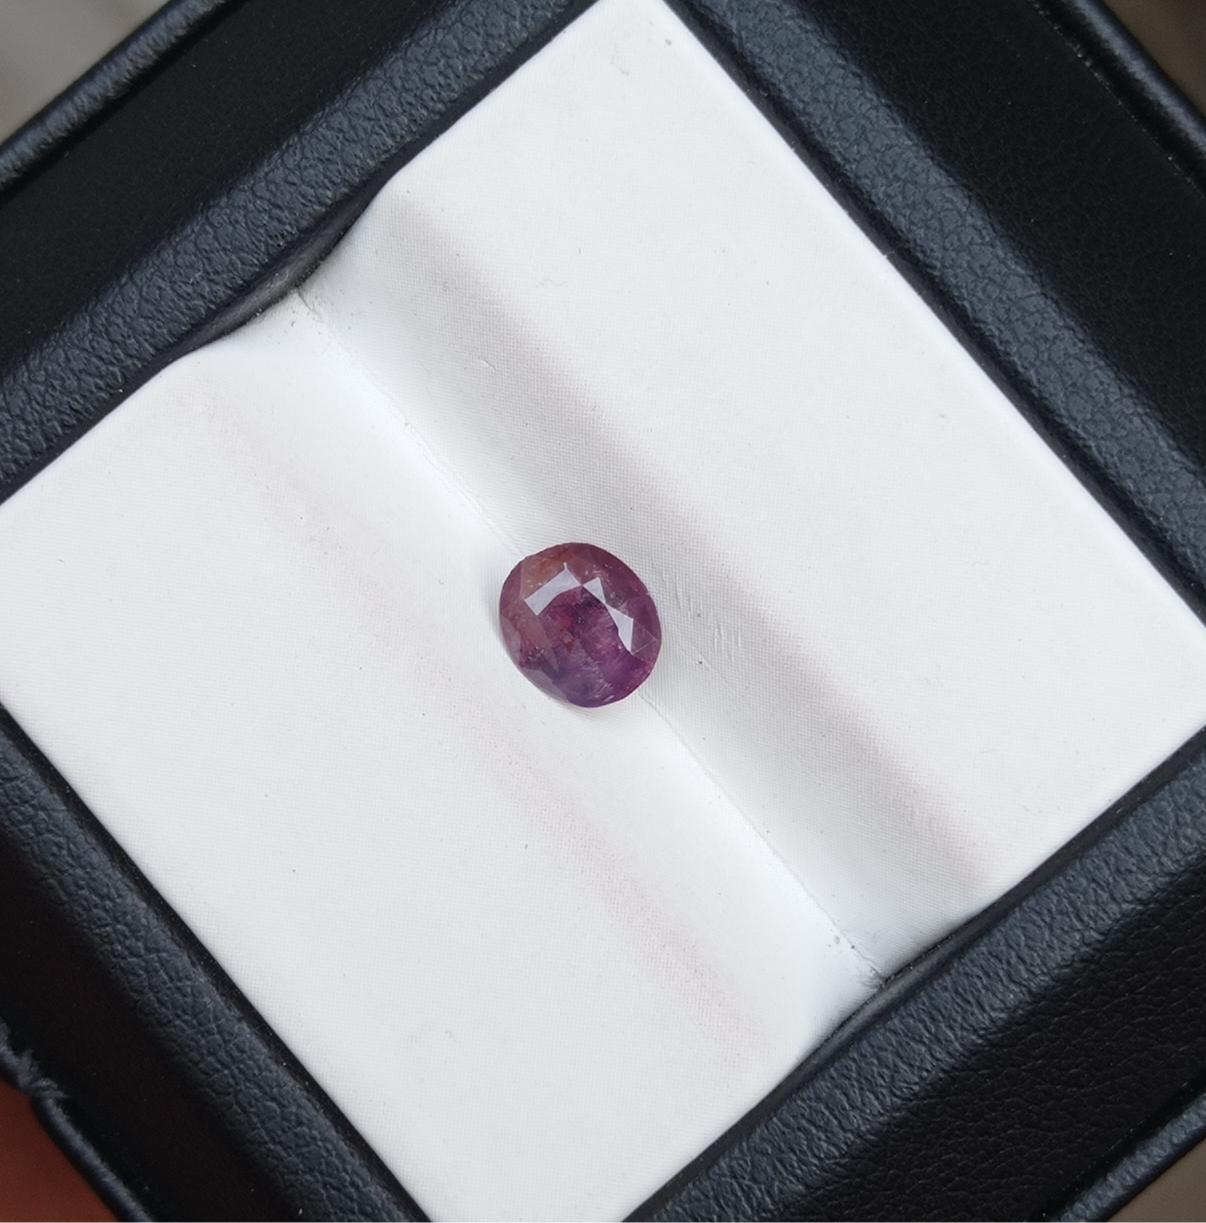 0.85ct Sapphire for Sale - Kashmiri Sapphire Gemstone - Dimensions 6.2x5.4x3.1mm